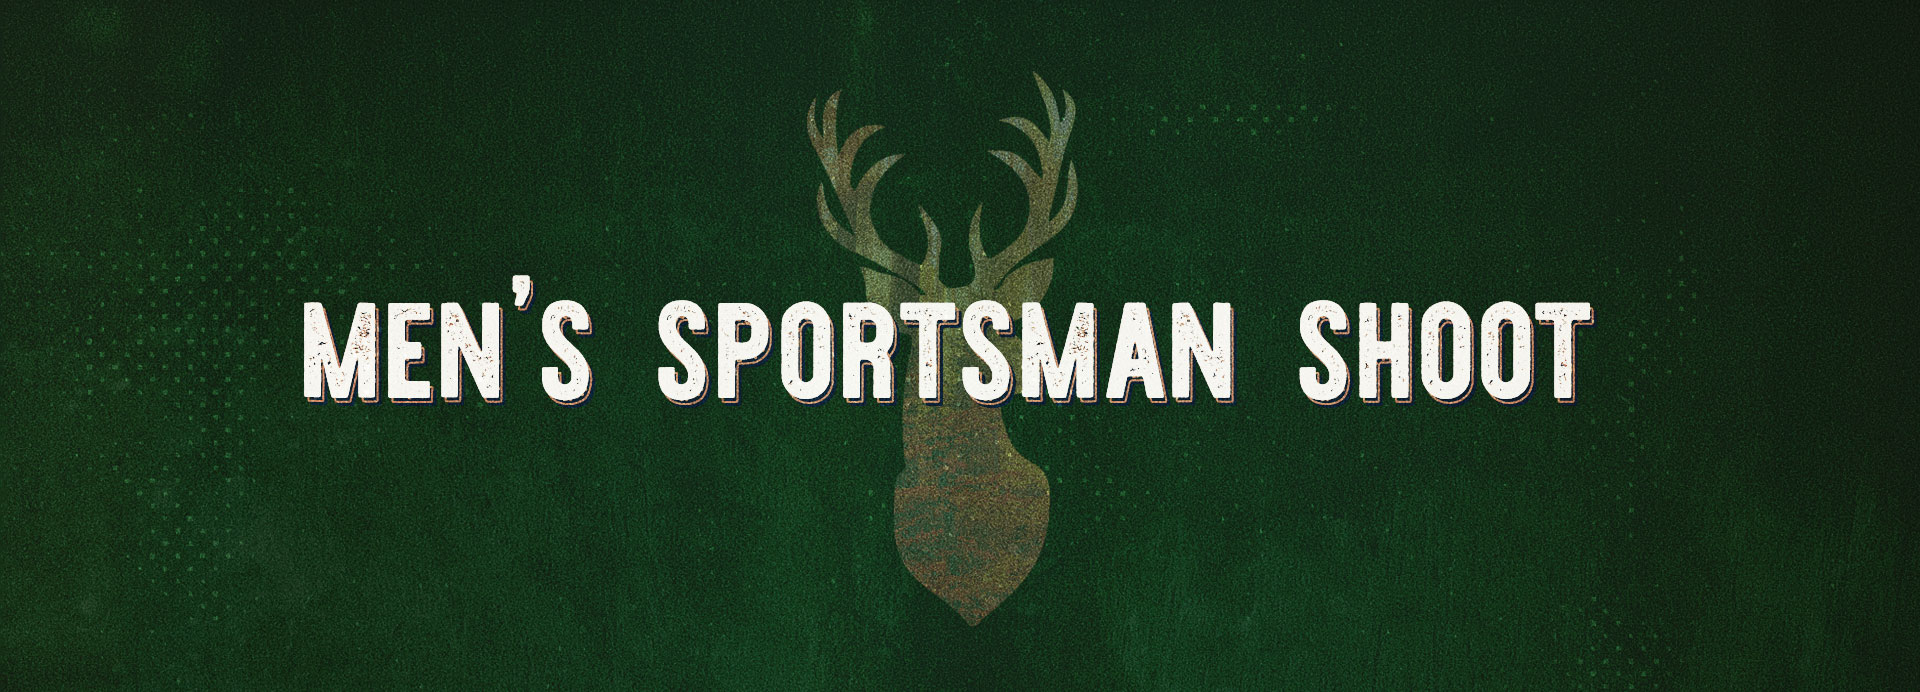 2019 - BHBC Men: Sportsman Shoot 